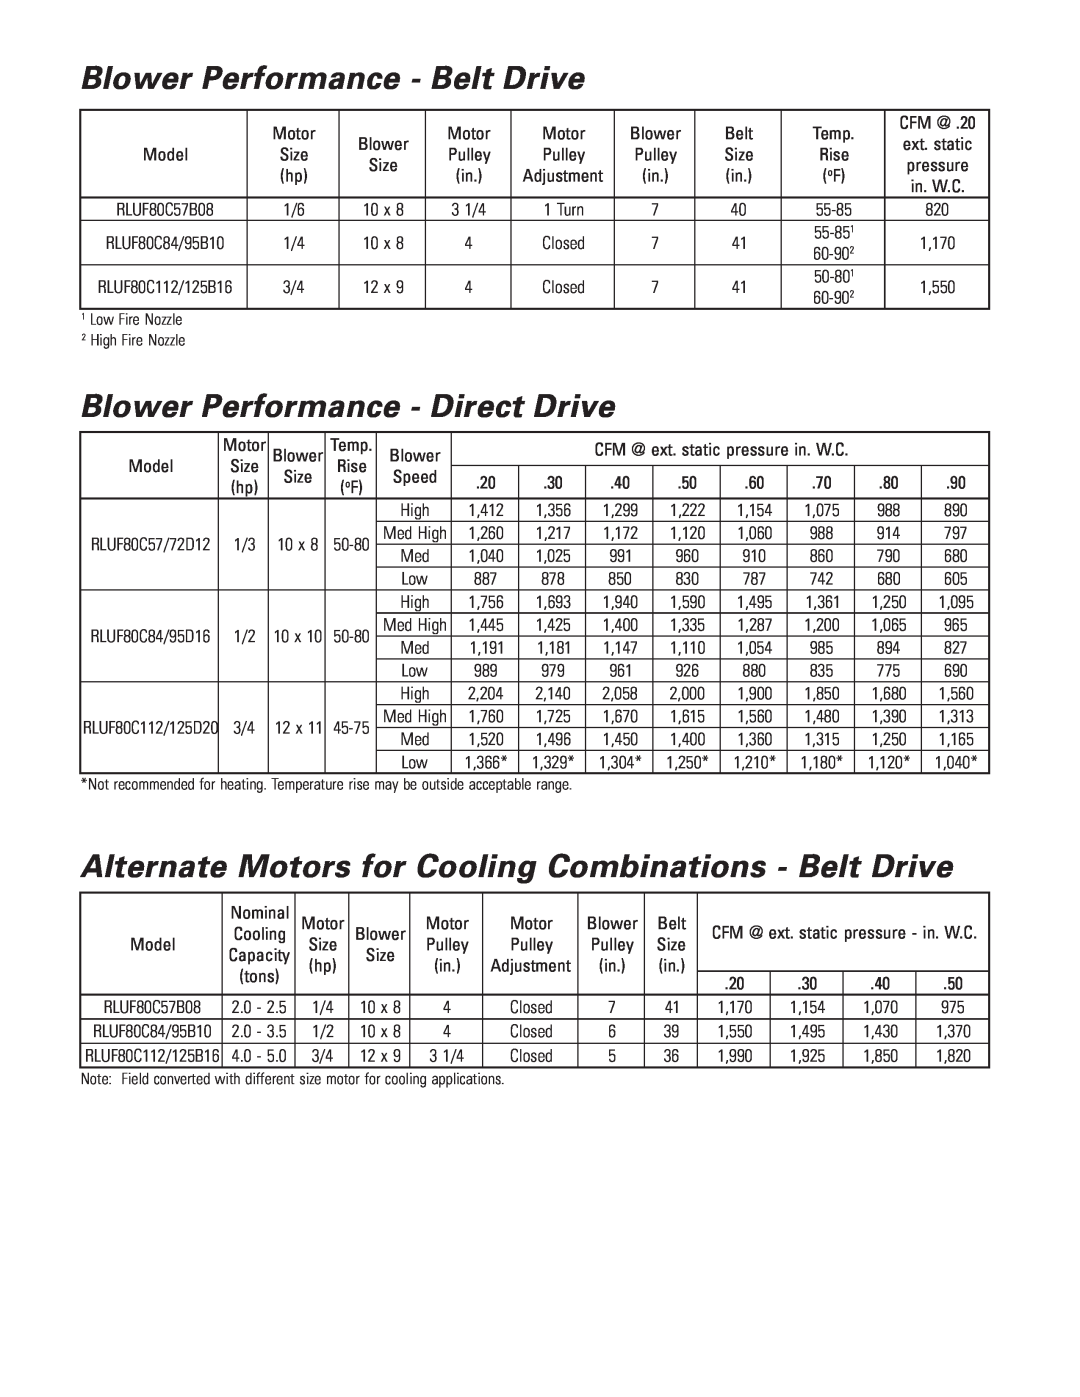 Ducane (HVAC) RLUF80C warranty Blower Performance - Belt Drive, Blower Performance - Direct Drive 